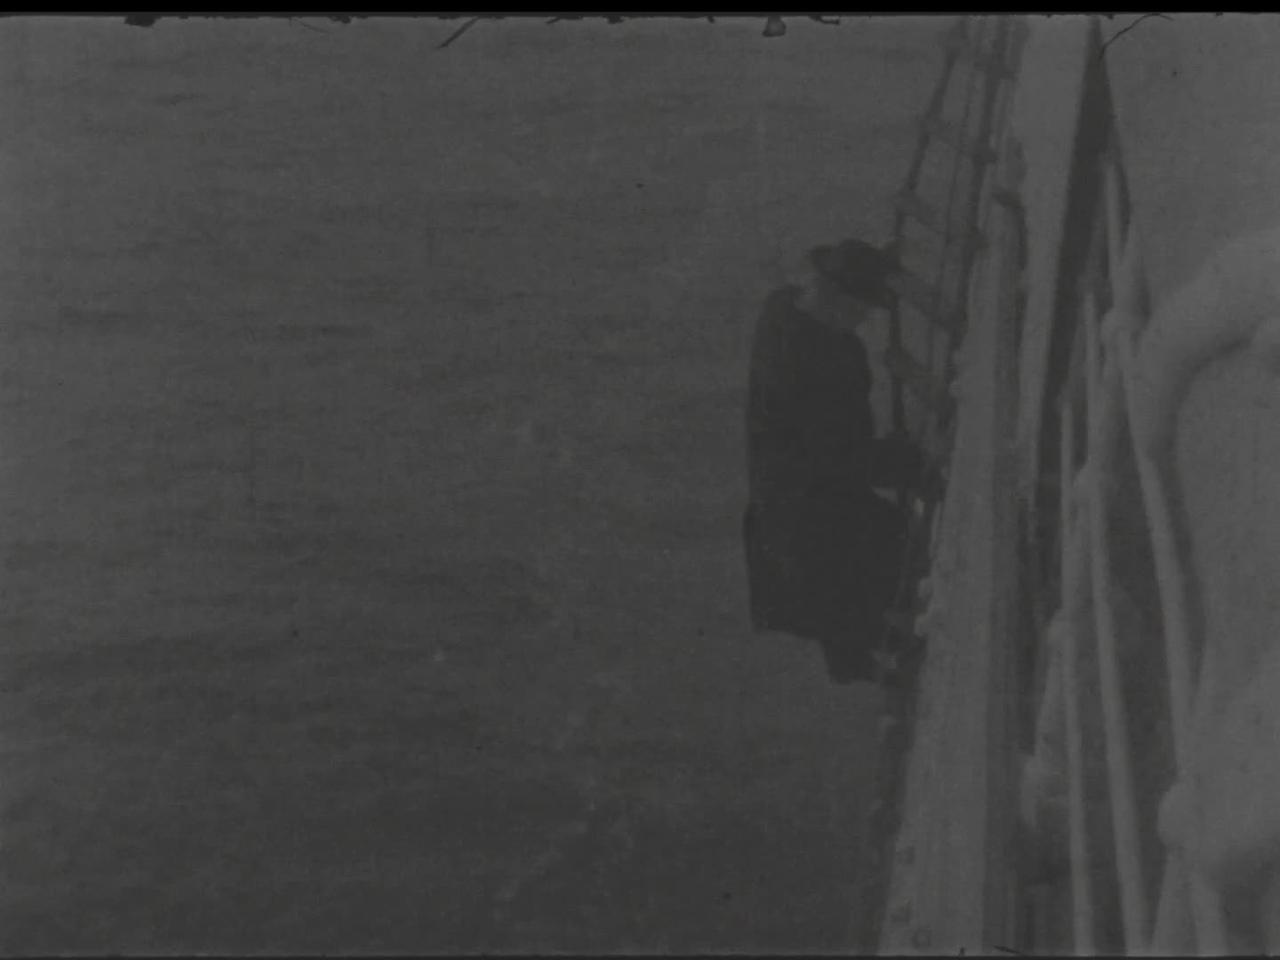 Pilot Leaving "Prinzessen Victoria Luise" At Sandy Hook (1903 Original Black & White Film)